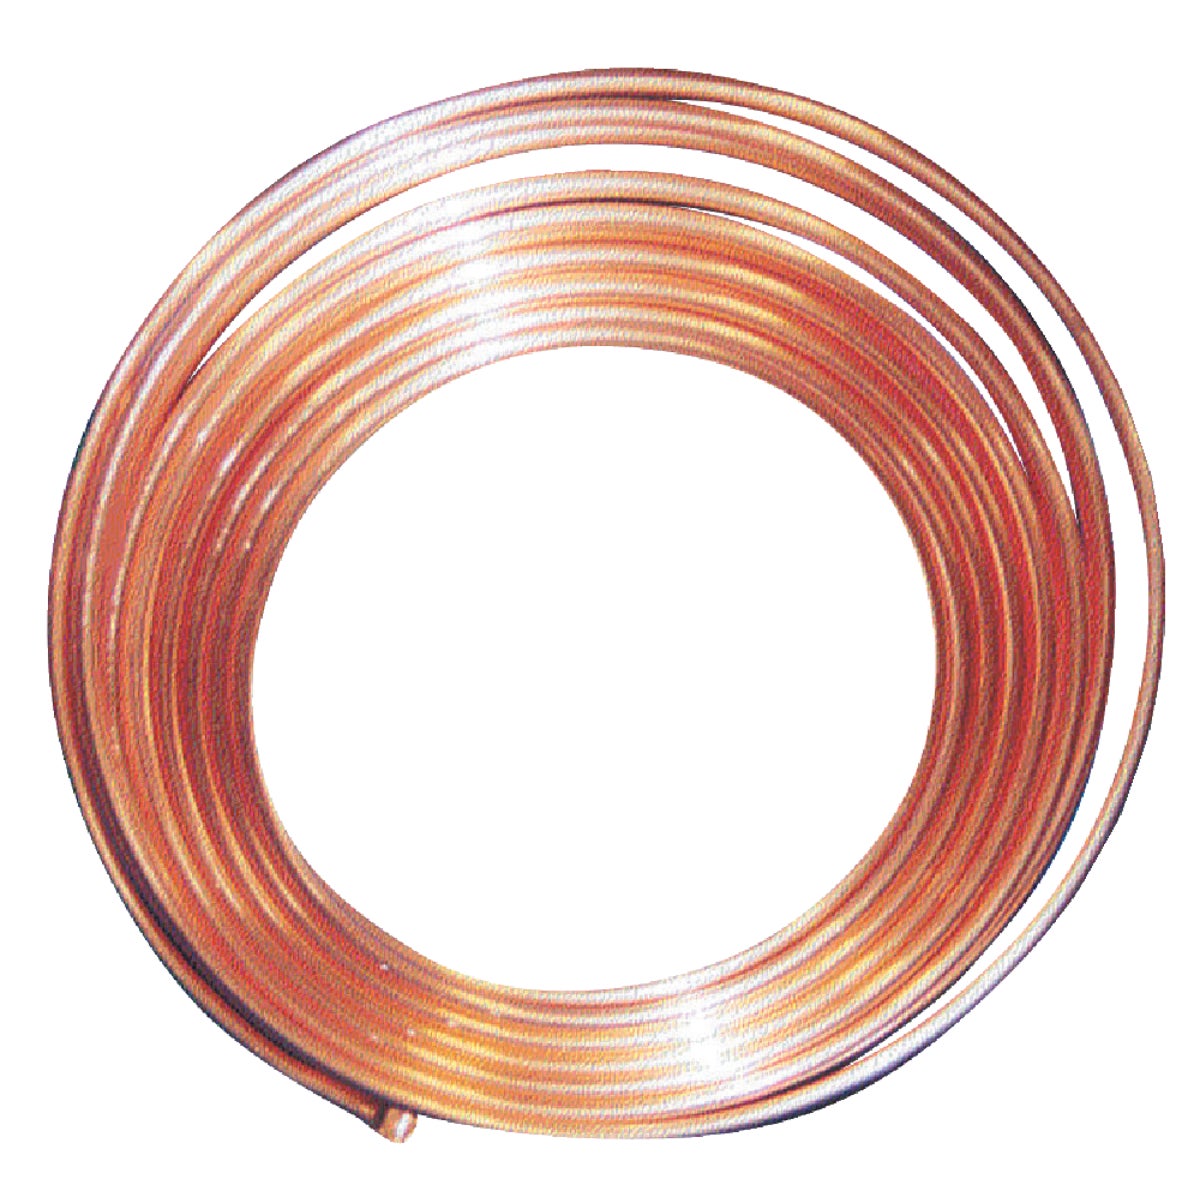 B&K 3/4 In. ID x 60 Ft. Type L Copper Tubing